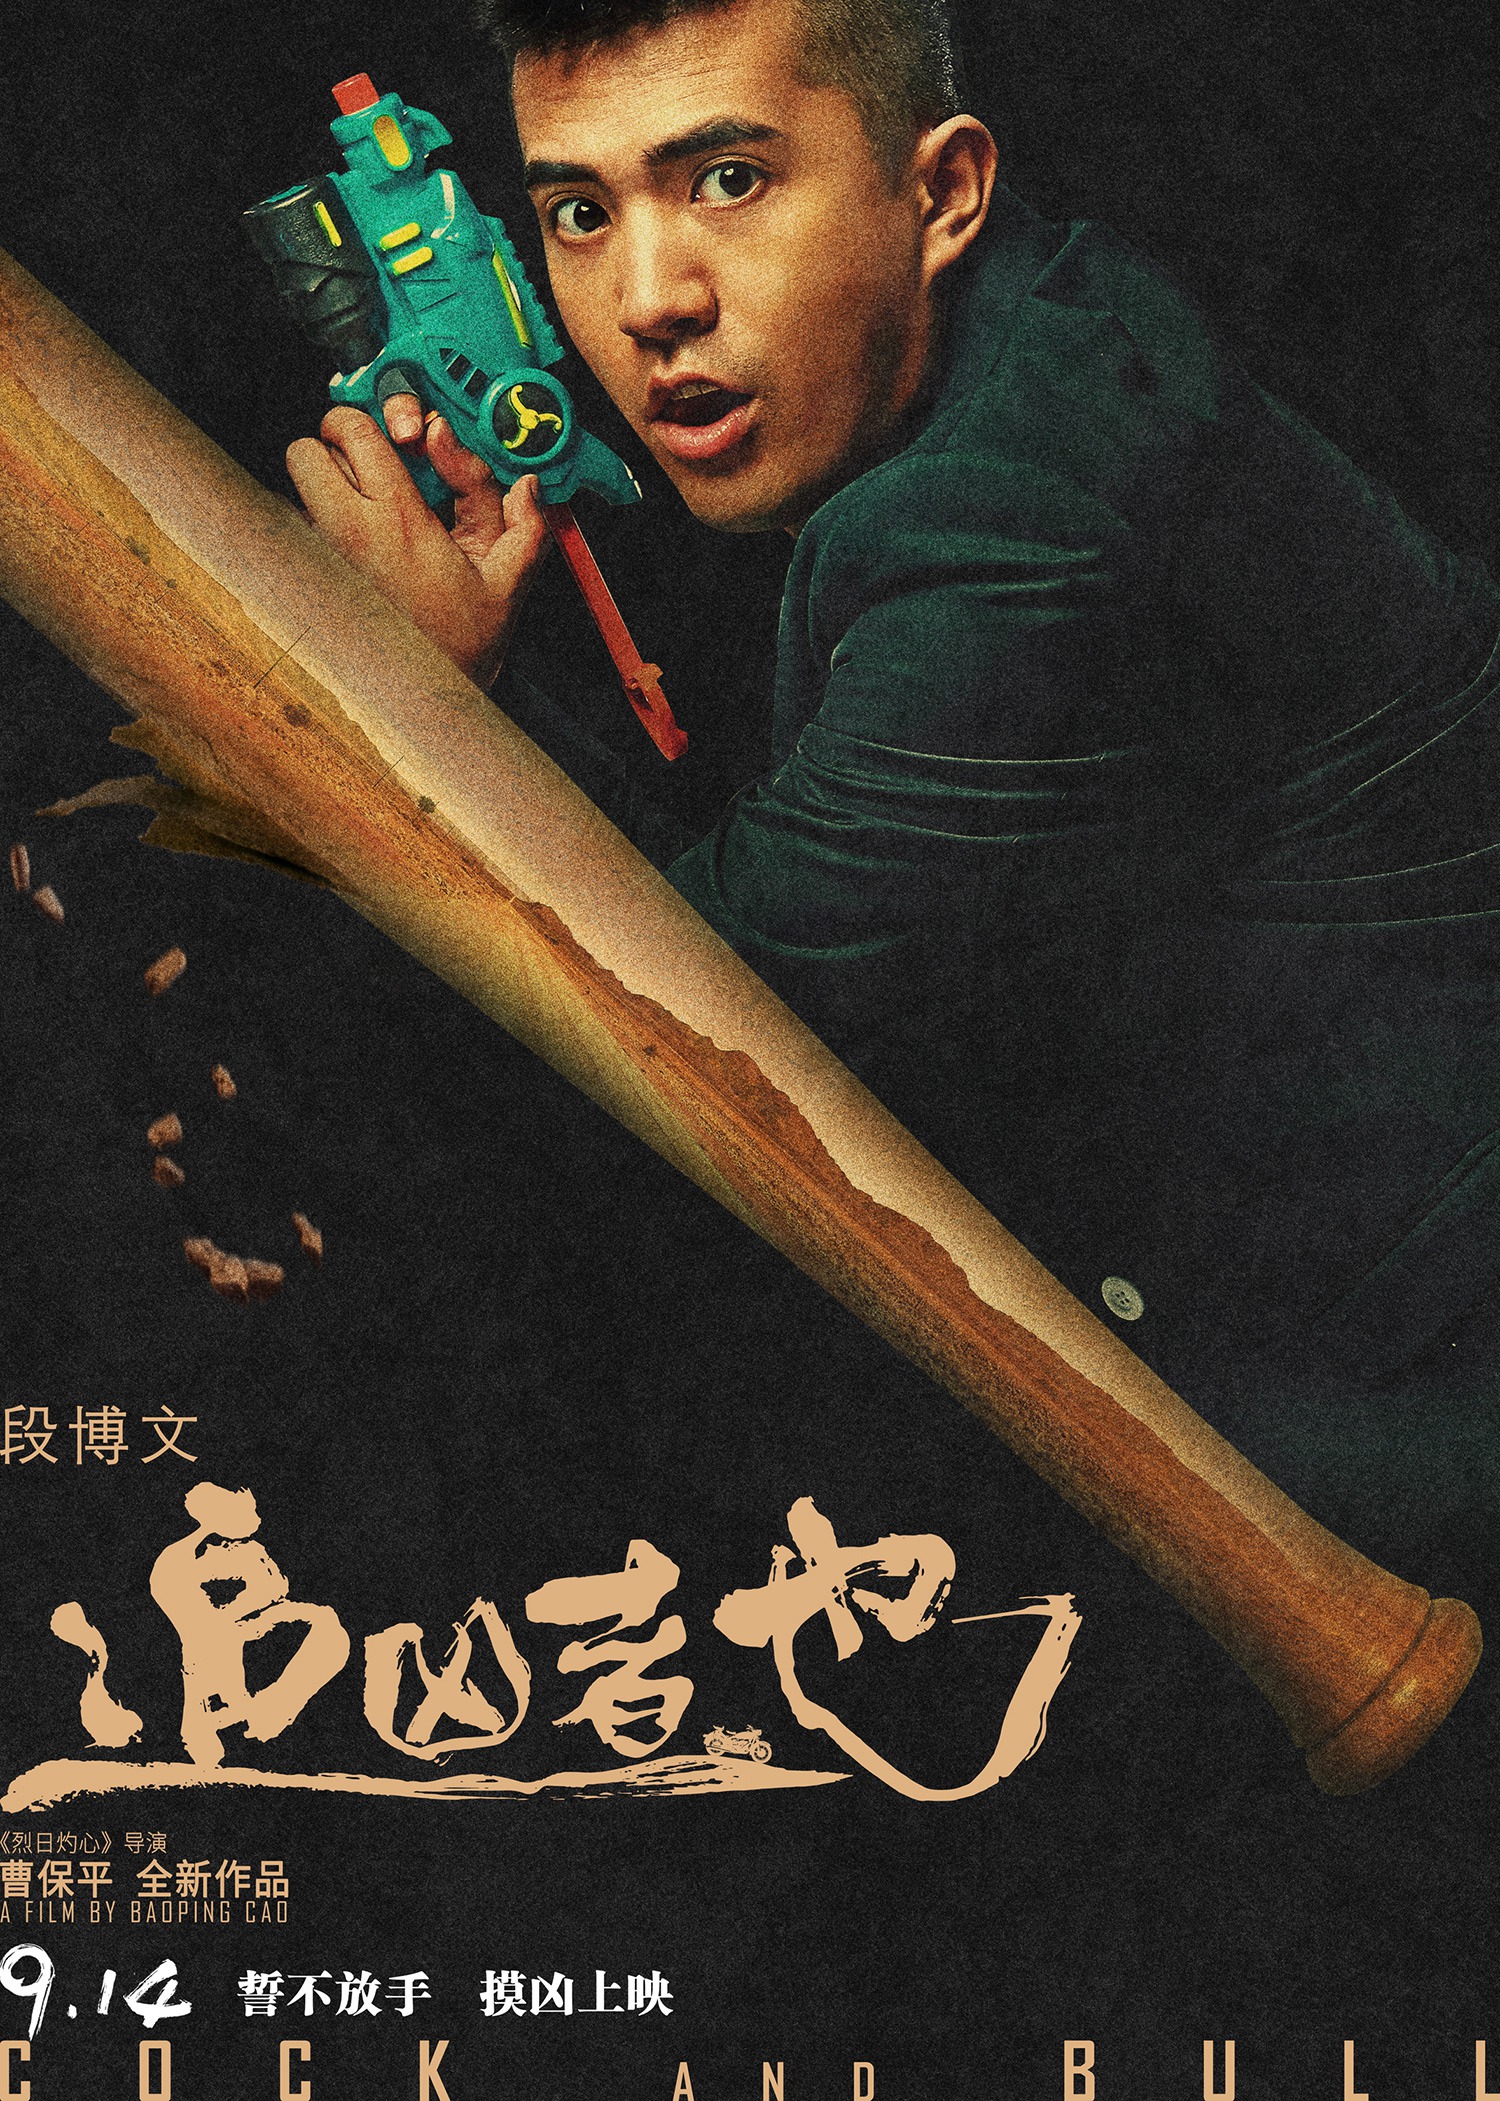 Mega Sized Movie Poster Image for Zhui xiong zhe ye (#12 of 16)